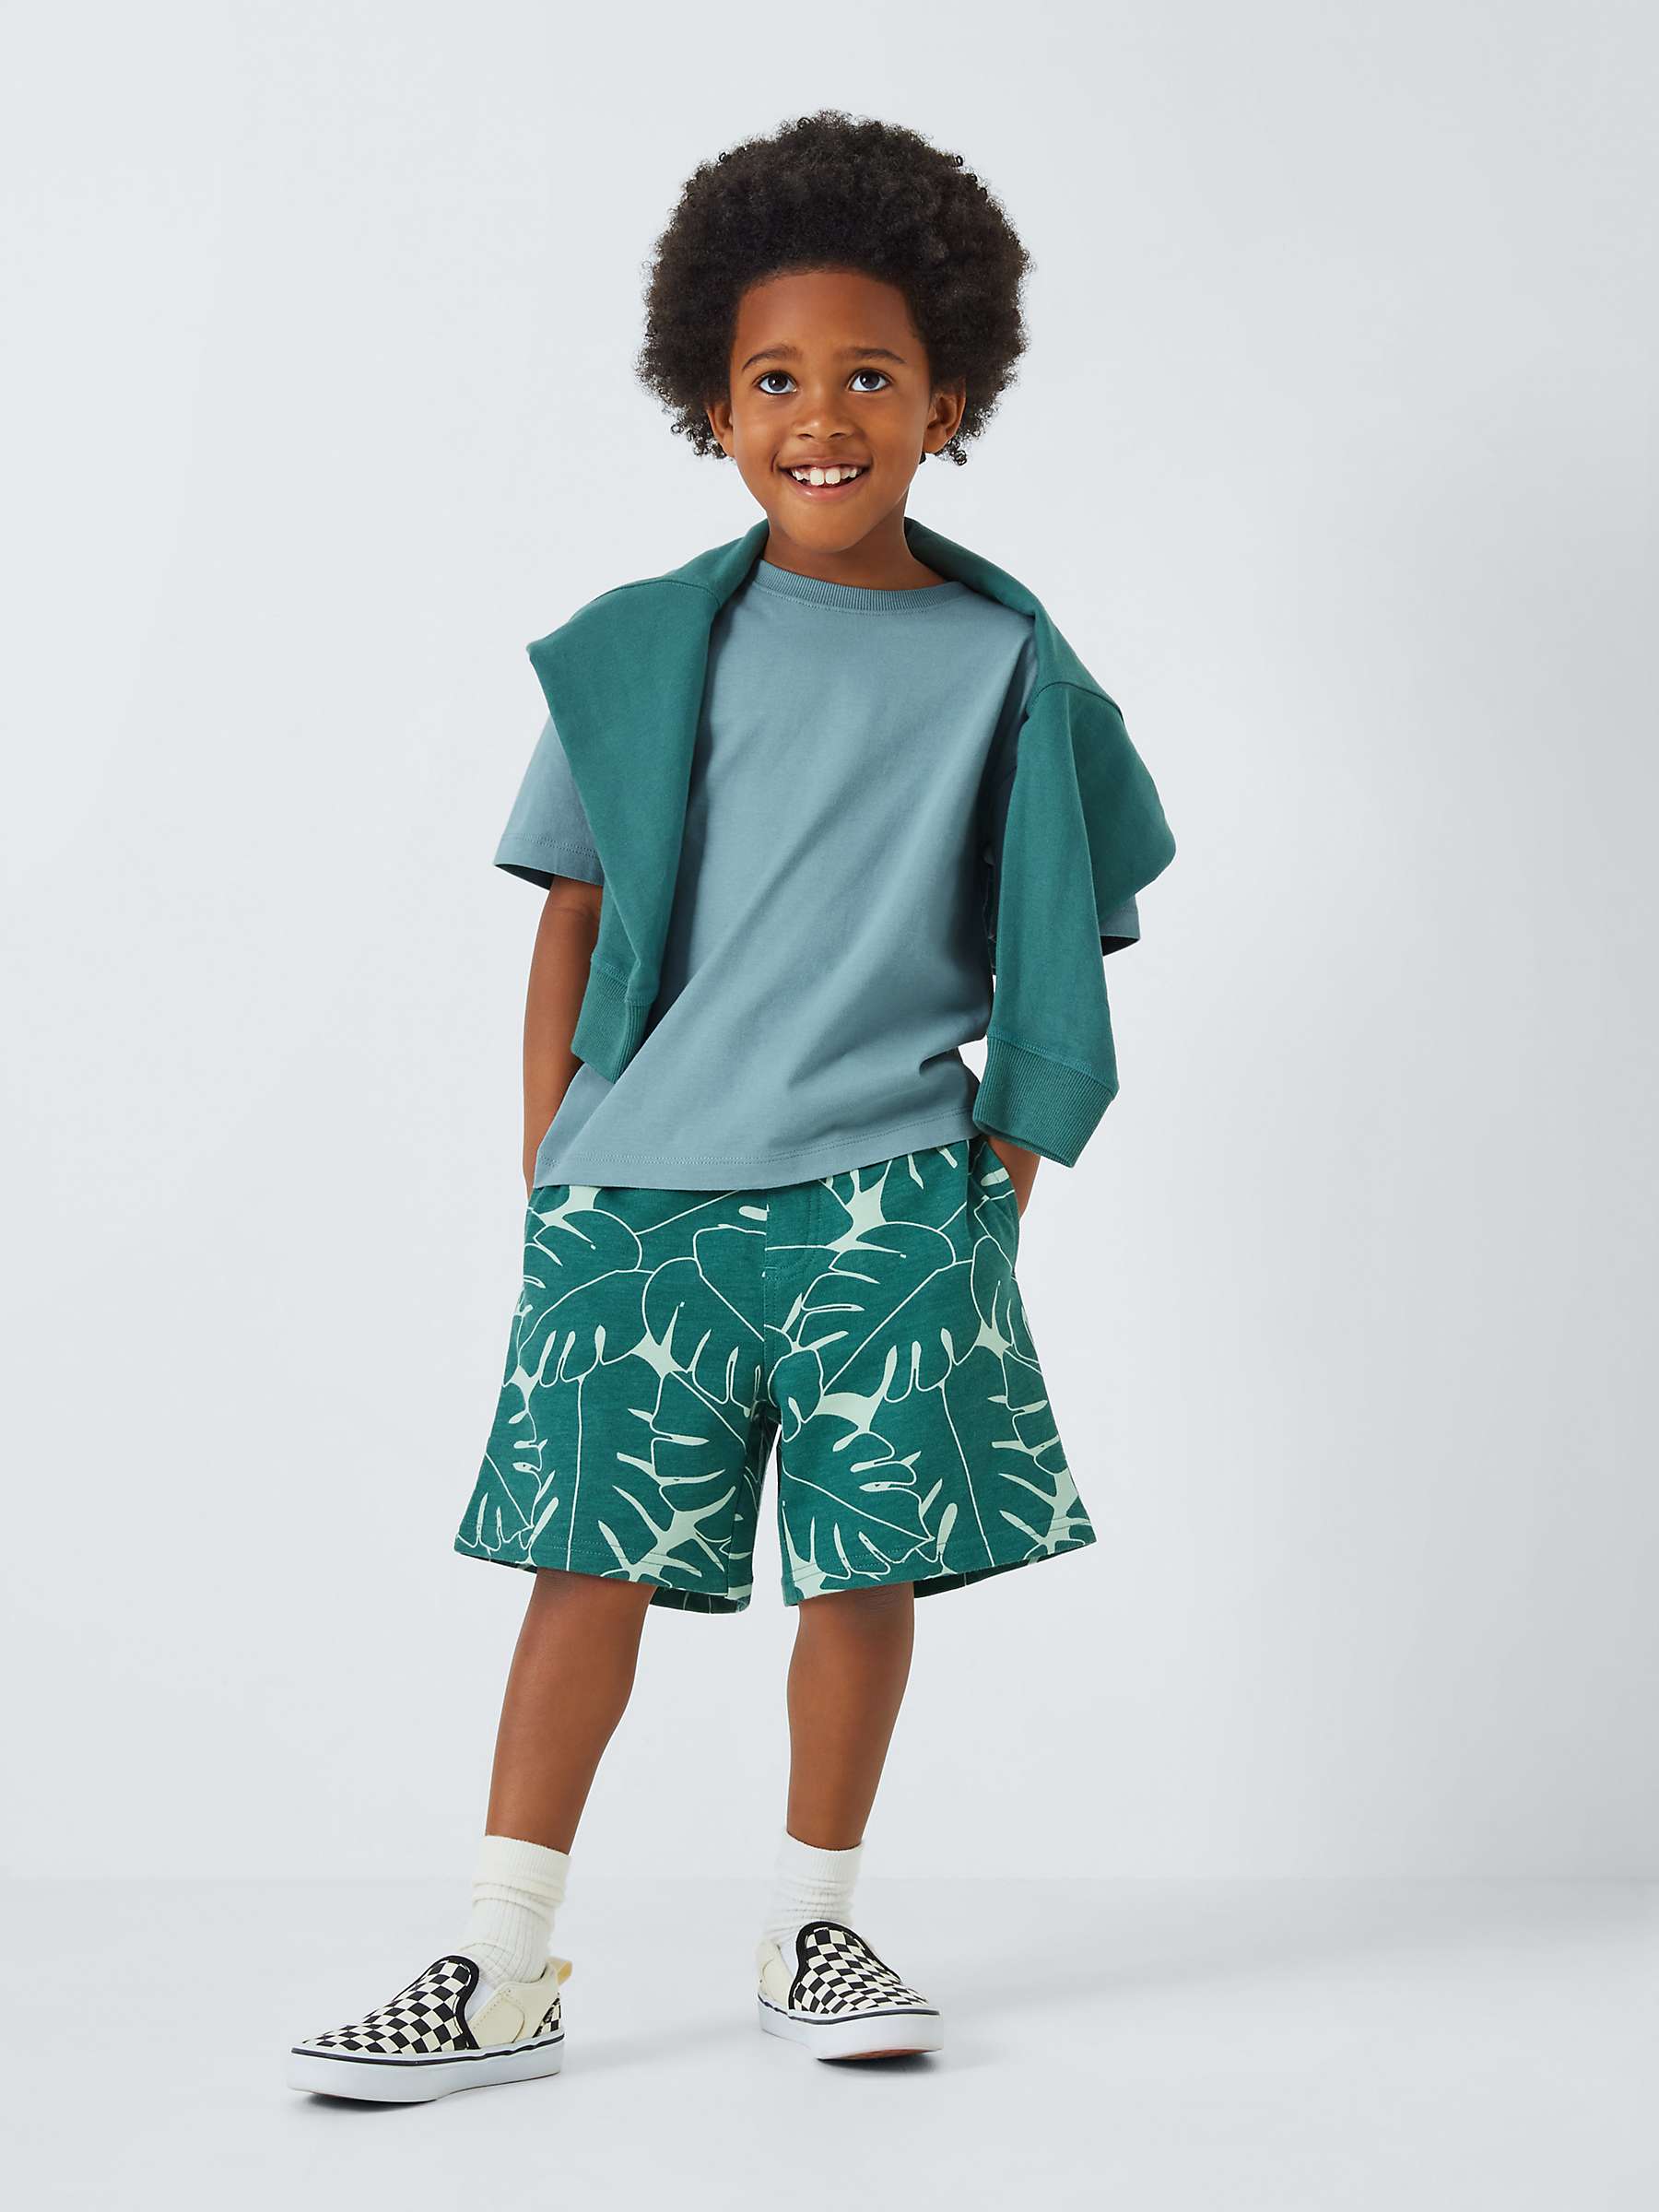 Buy John Lewis Kids' Short Sleeve Cotton T-Shirt, Pack of 4, Multi Online at johnlewis.com